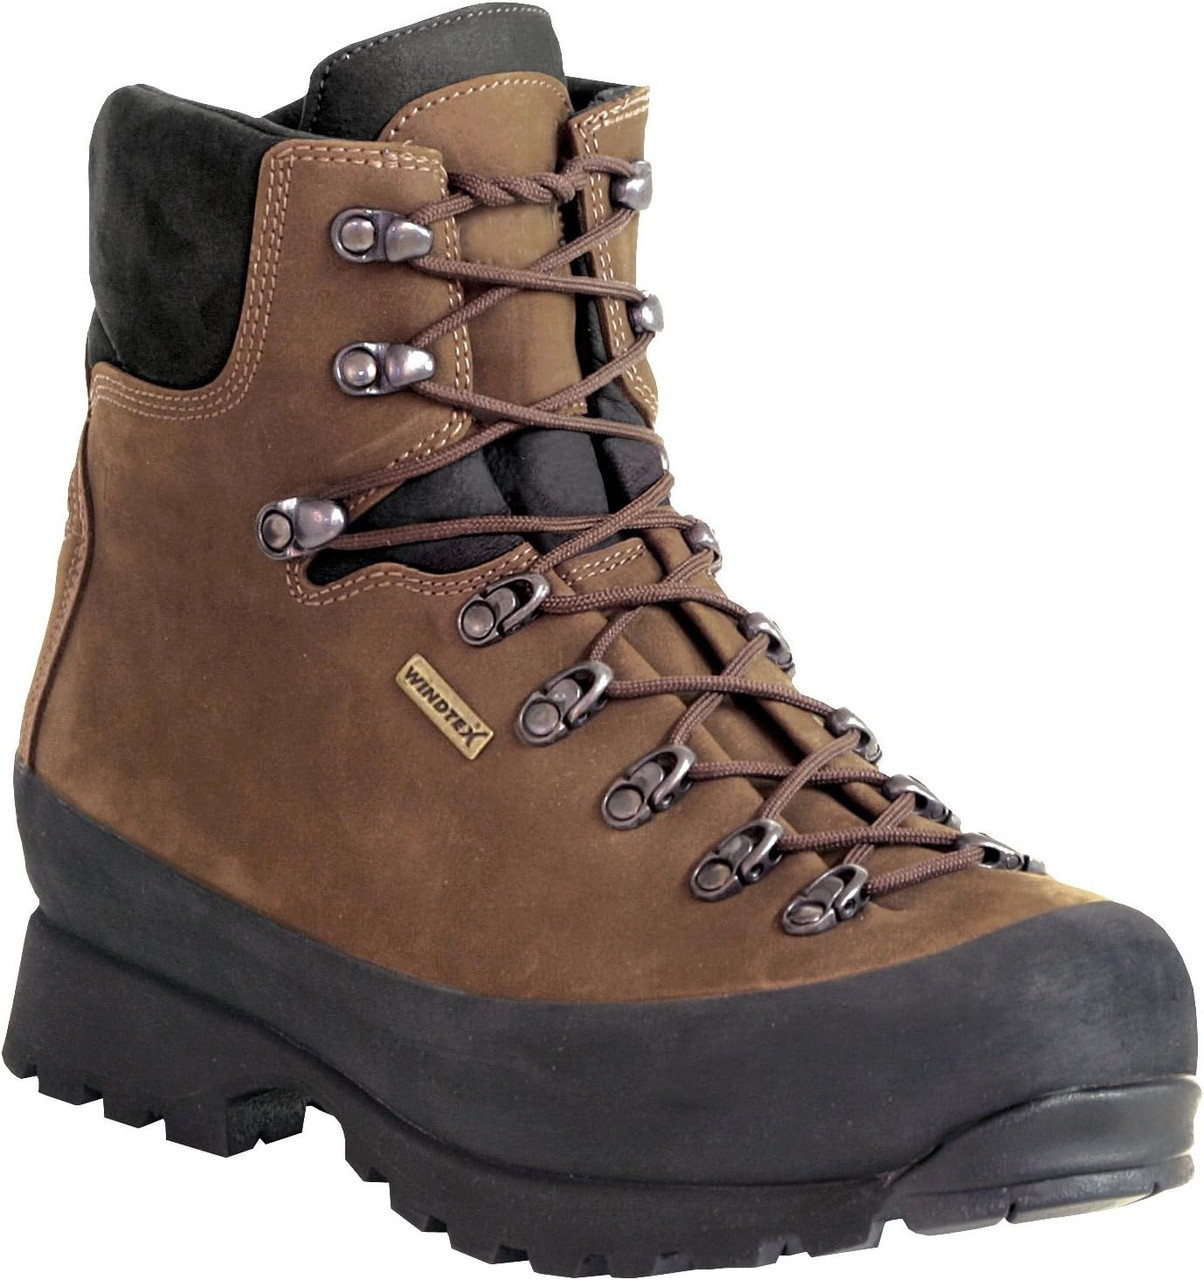 Kenetrek Hardscrabble Leather Hiking Boot 7" Upper Size 11.5